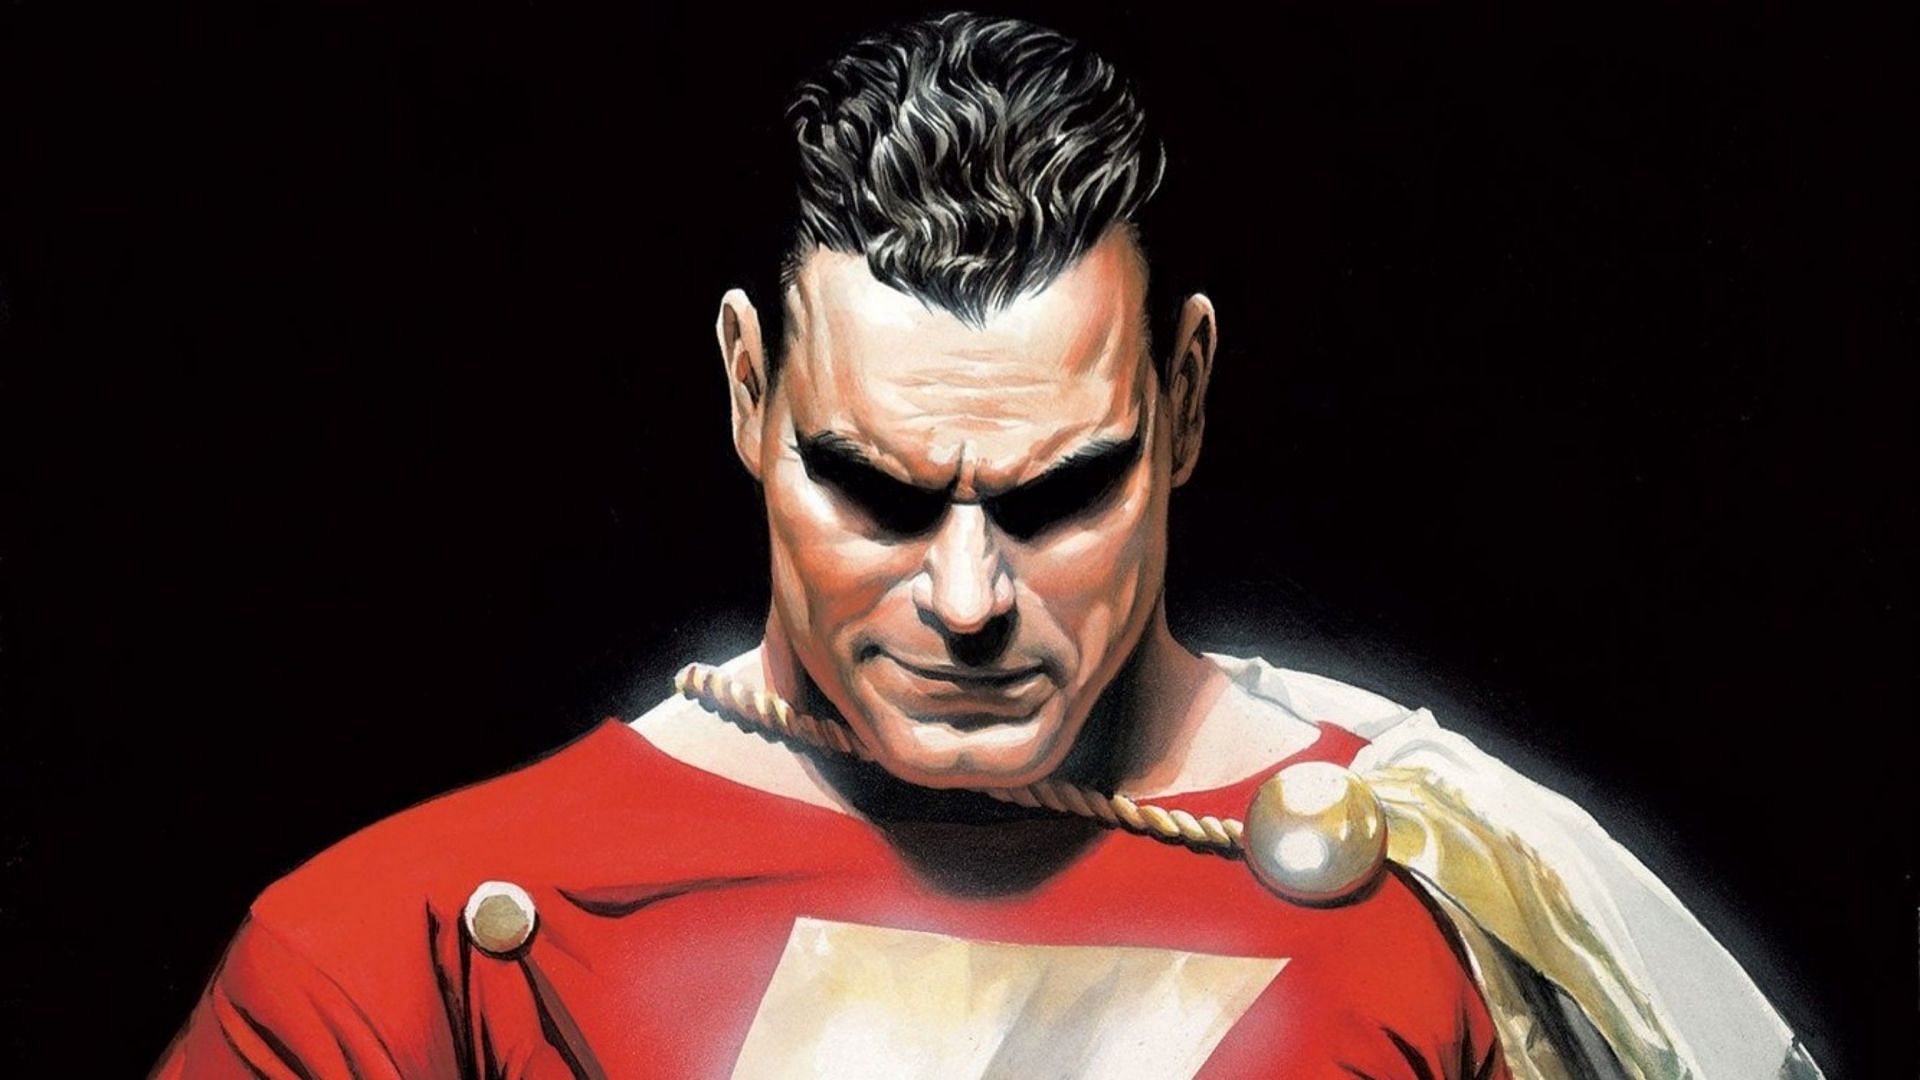 Captain Marvel/Shazam from the comic books (Image via DC Comics)